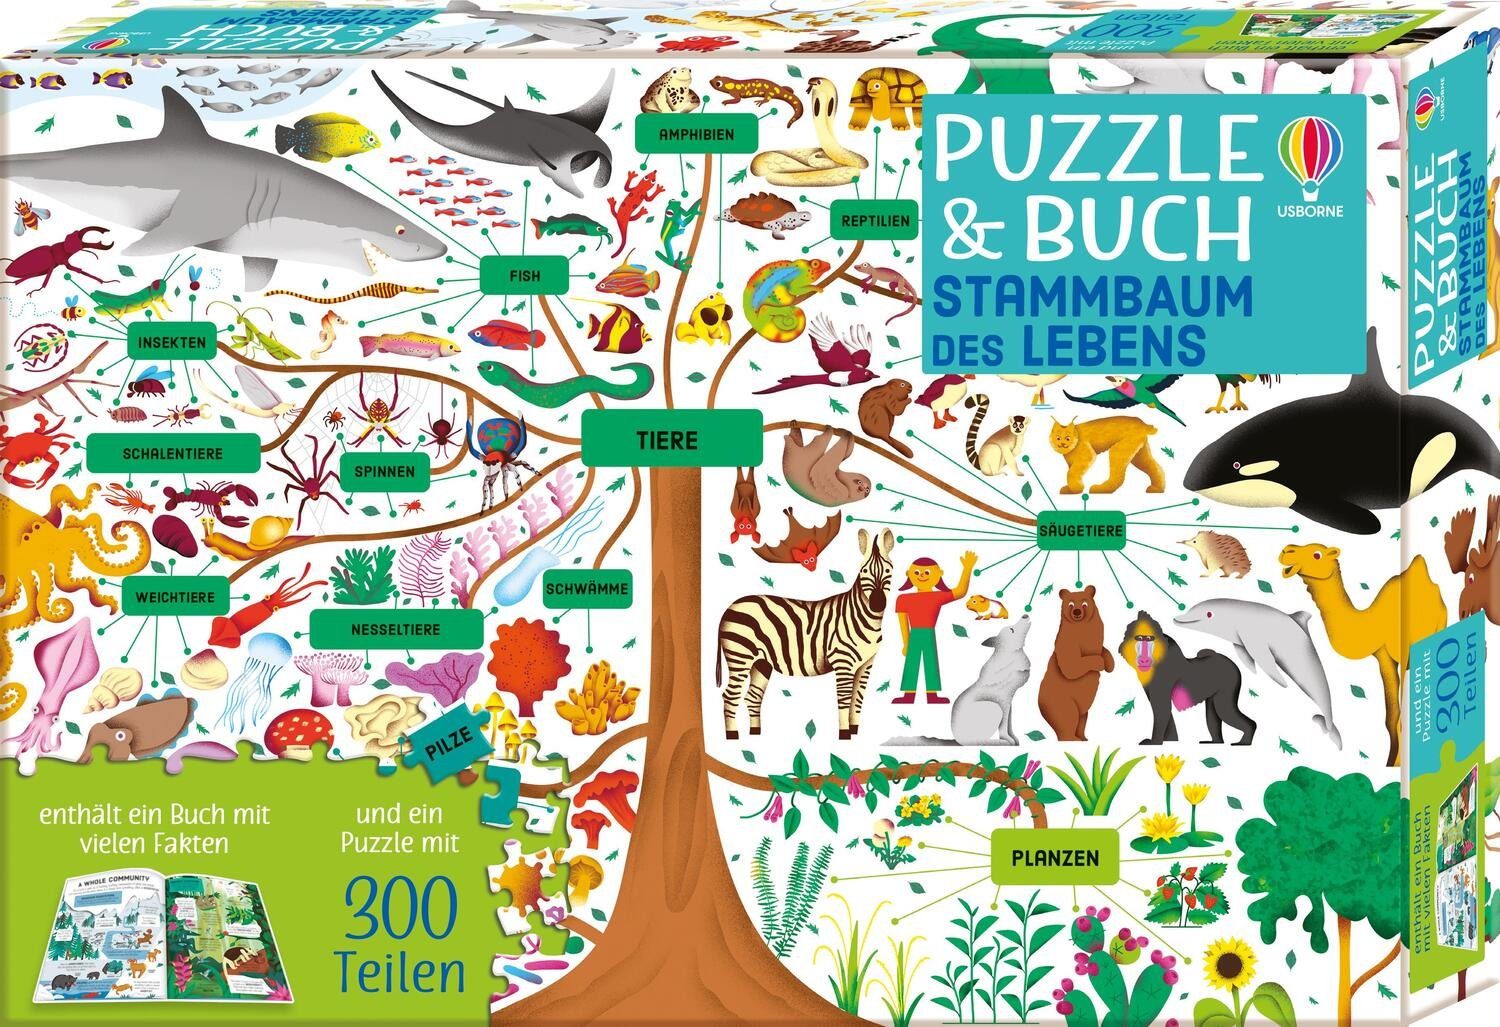 Puzzleteile 300 Lebens, Puzzle & Verlag Puzzle Usborne Stammbaum Buch: des